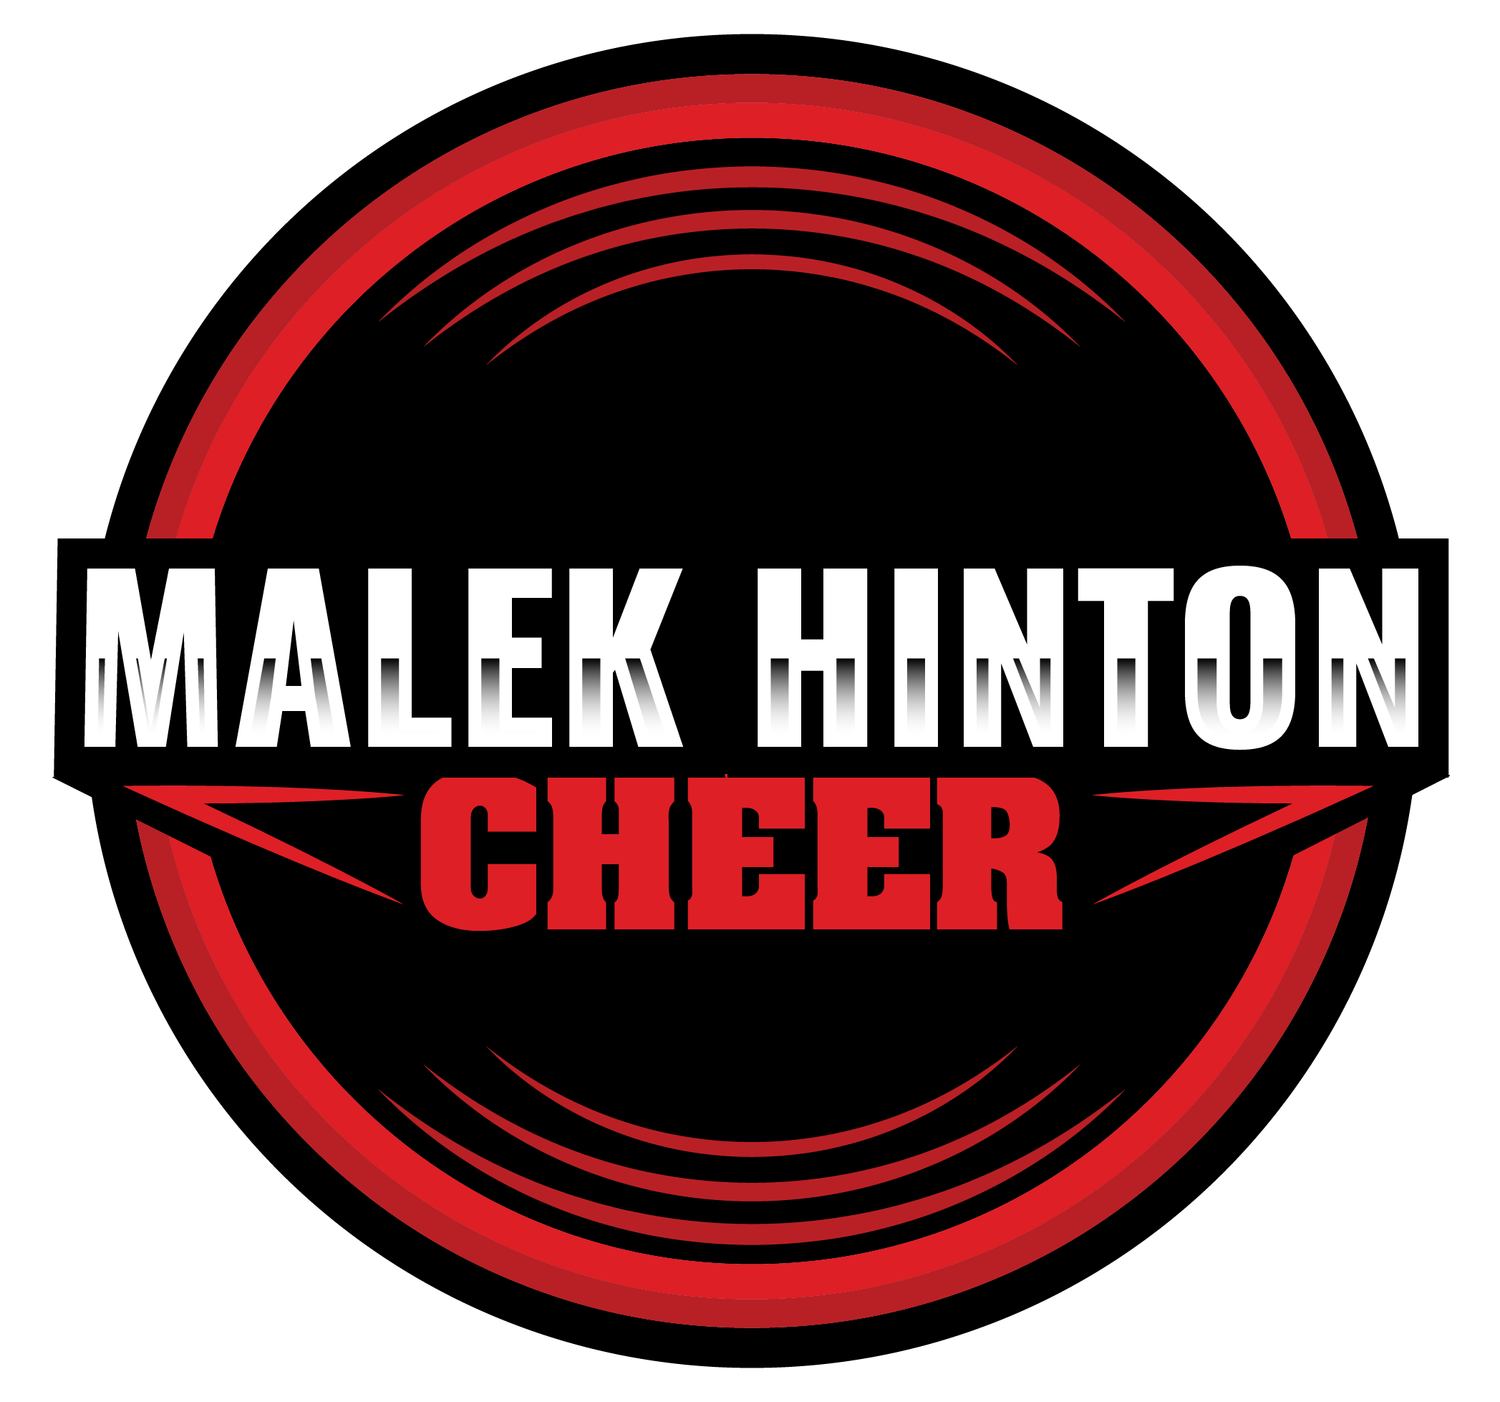 Malek Hinton Cheer